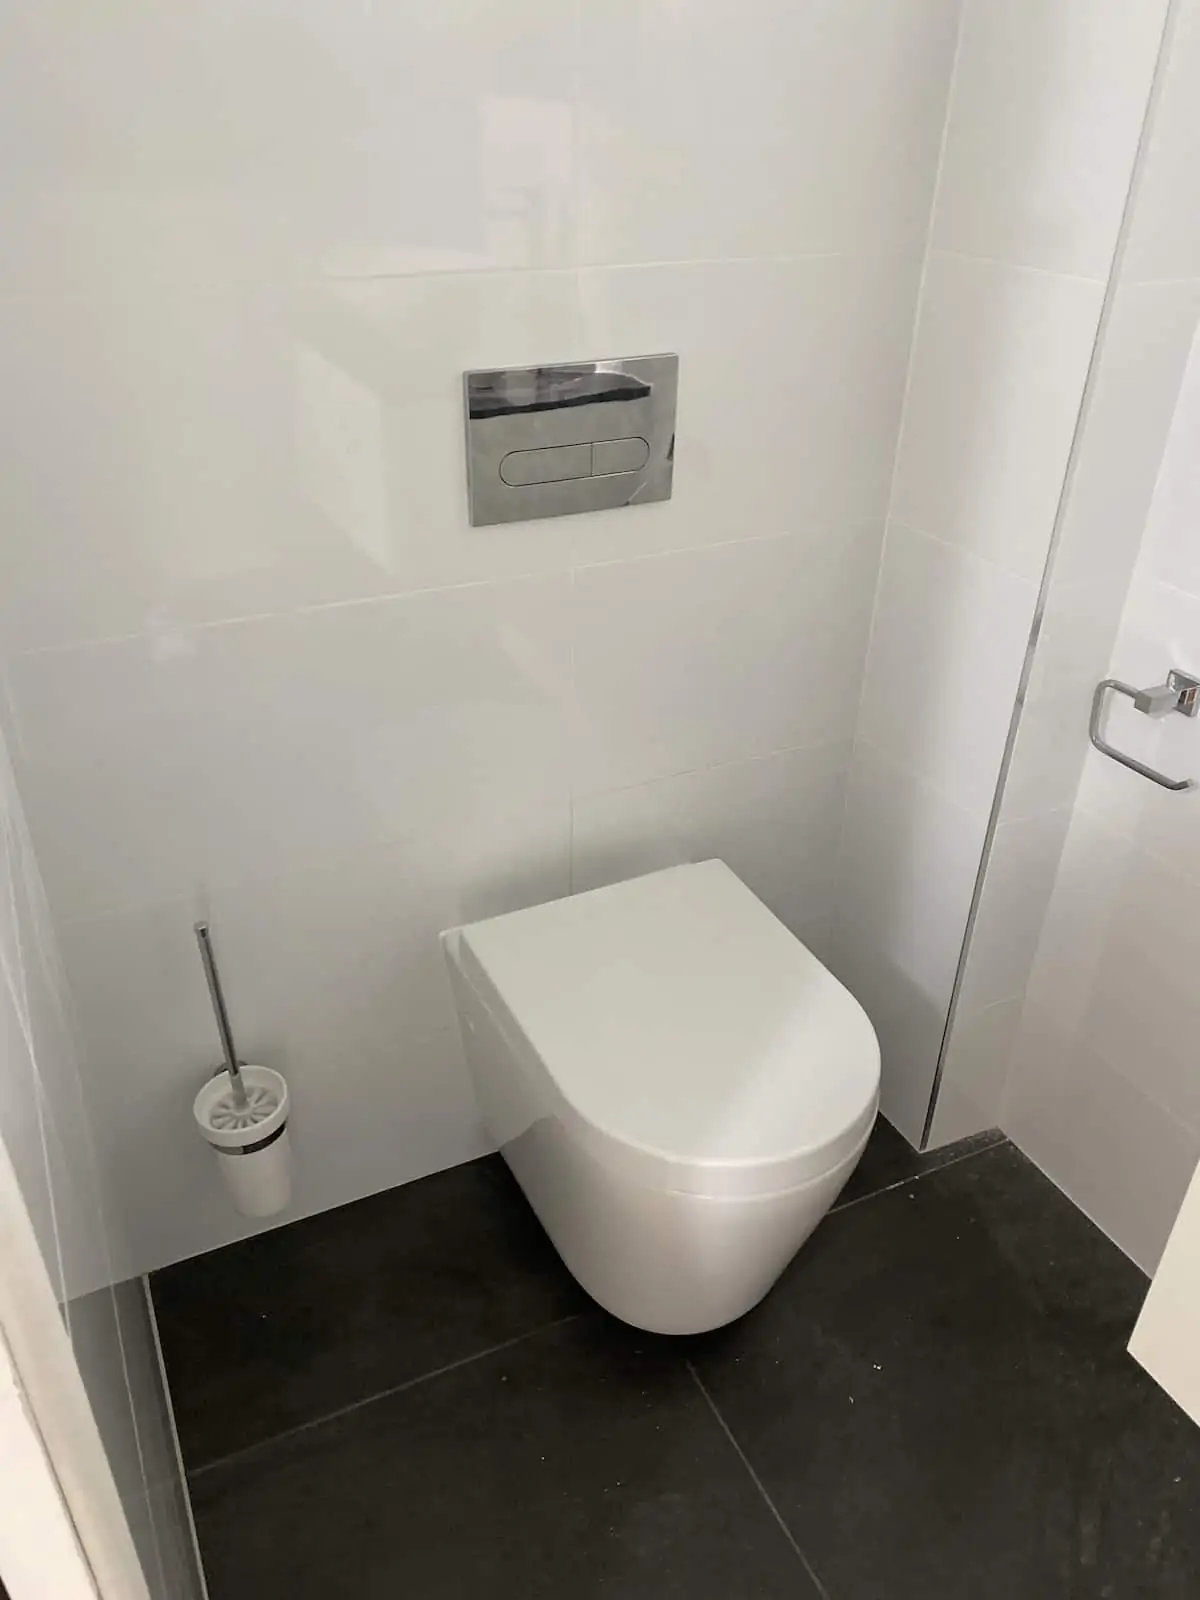 single toilet as part of bathroom renovations